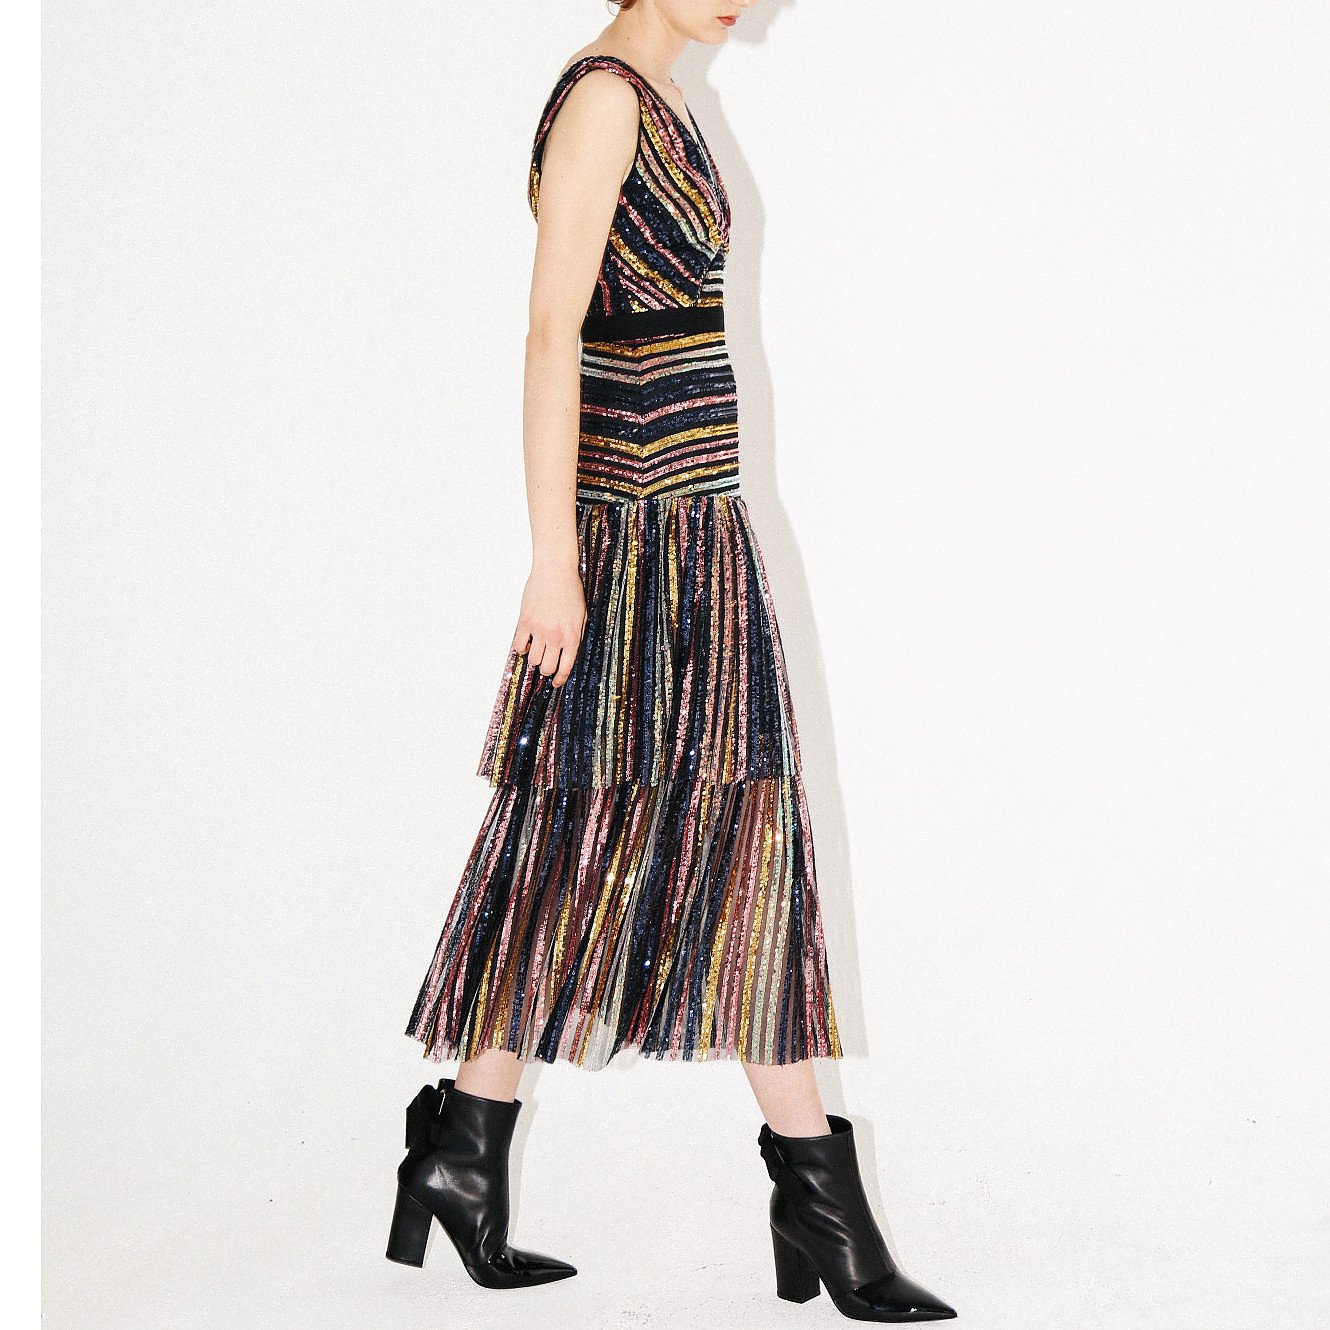 Rent or Buy Self-Portrait Sequin Stripe Midi Dress from 